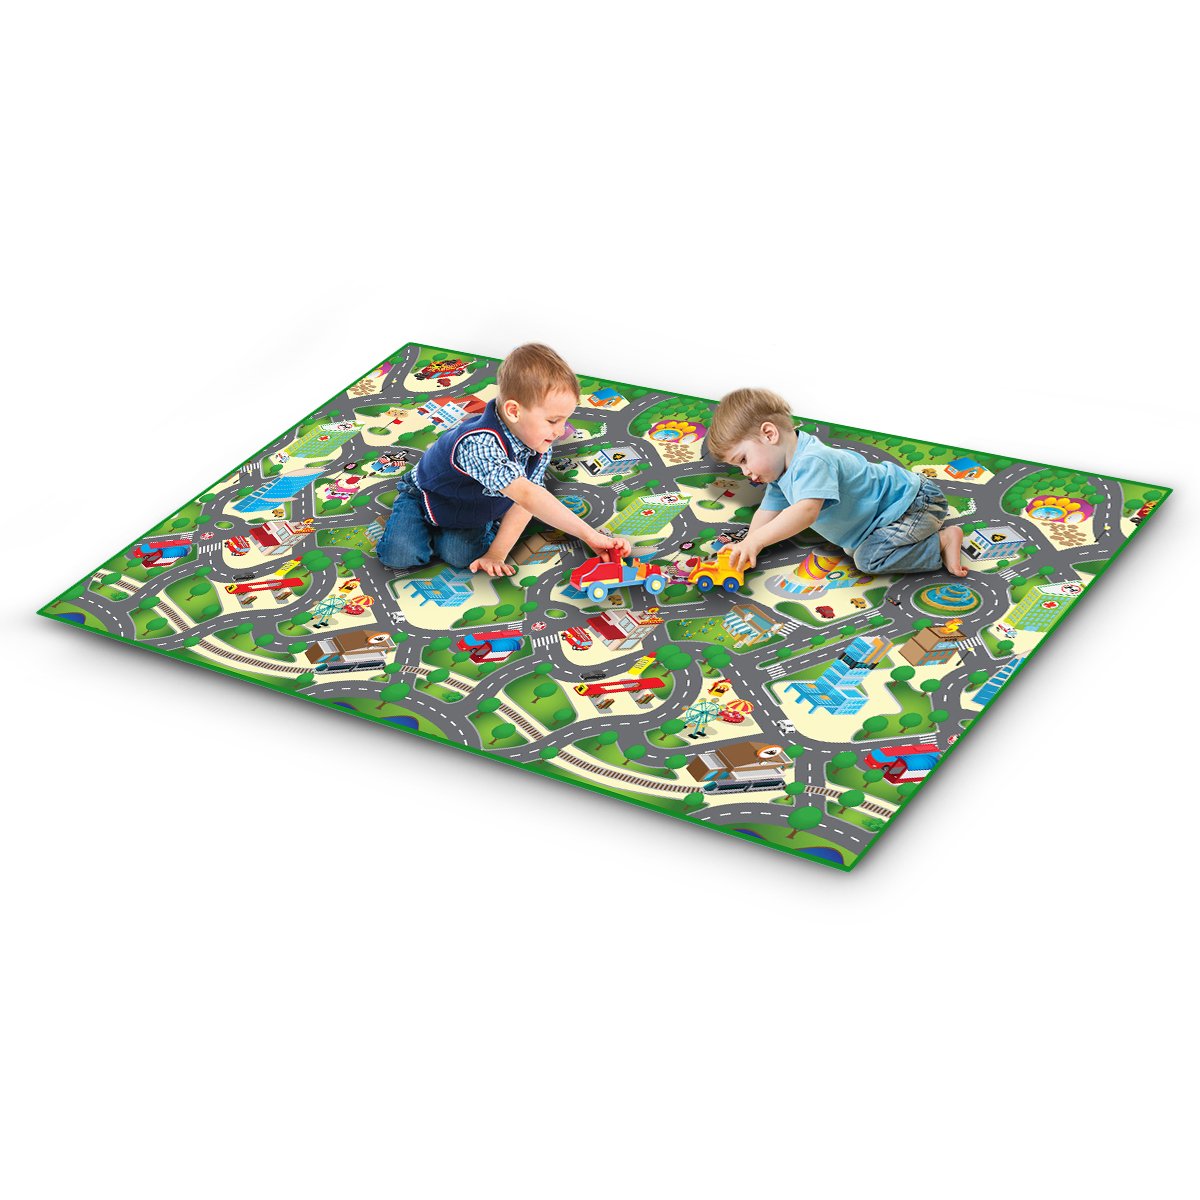 Rollmatz City Design Baby Kids Play Floor Mat 200cm x 120cm